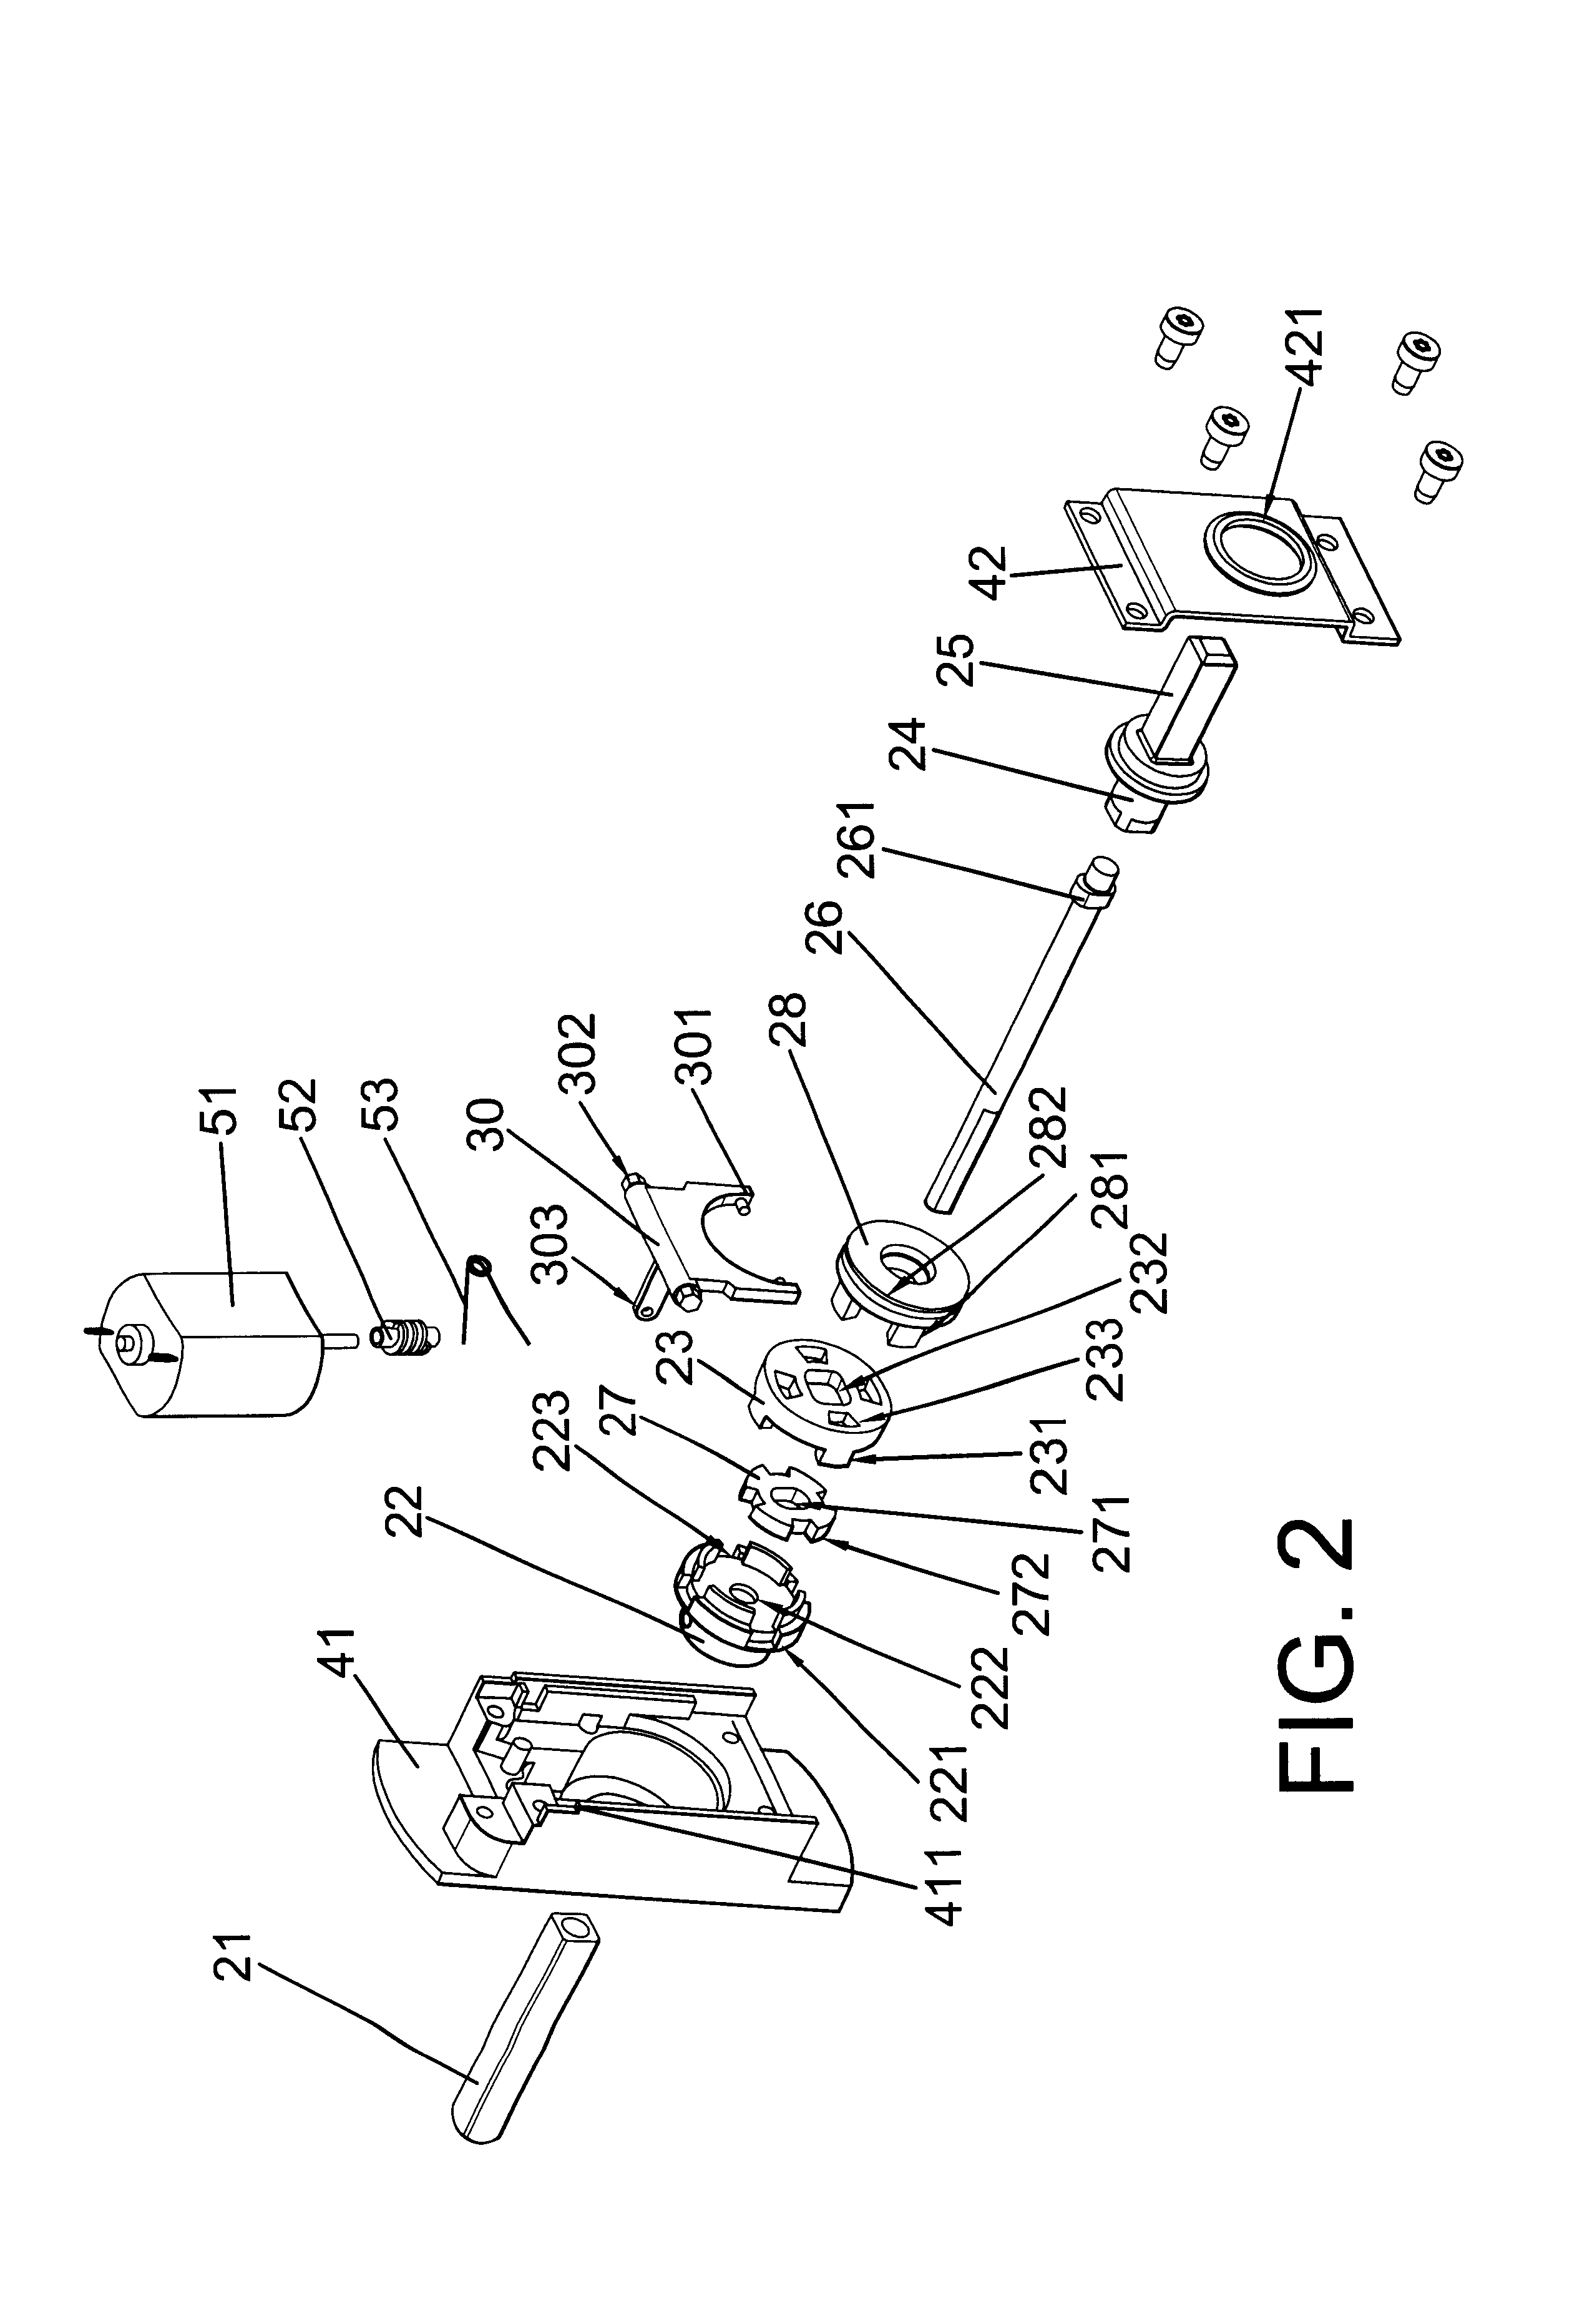 Clutch mechanism for electronic locks